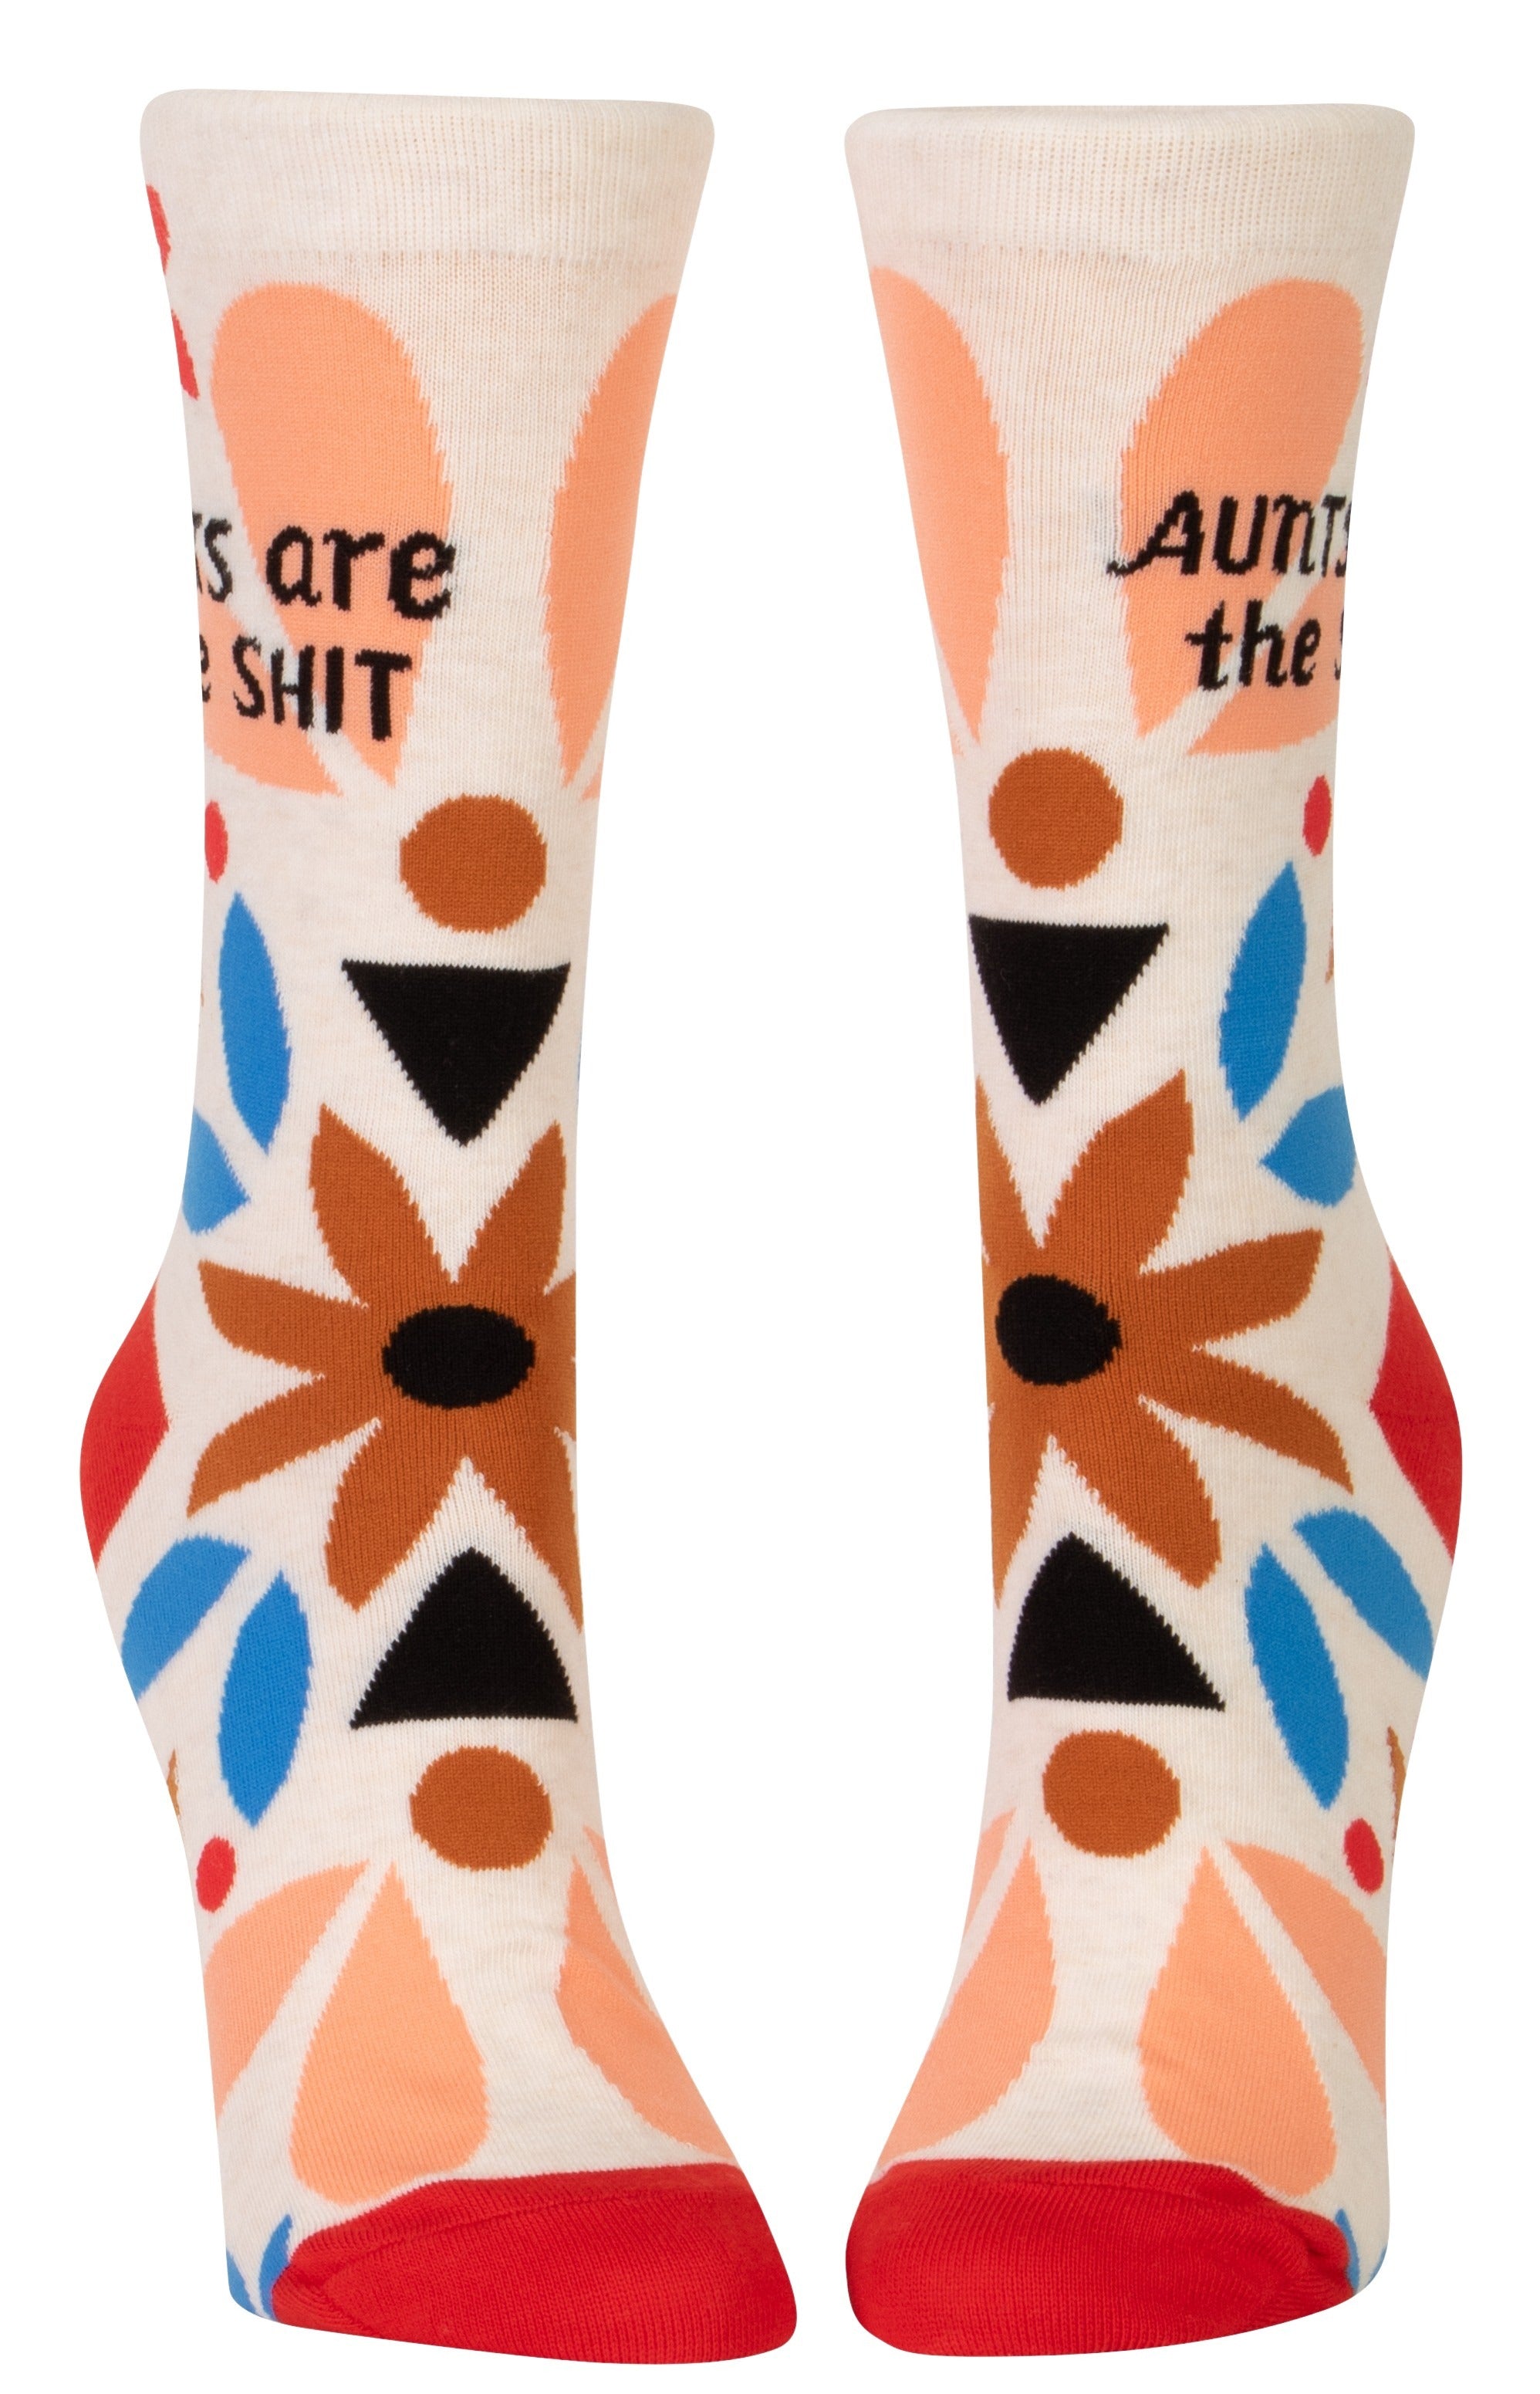 Blue Q - Crew Socks - Aunts Are The Sh!t